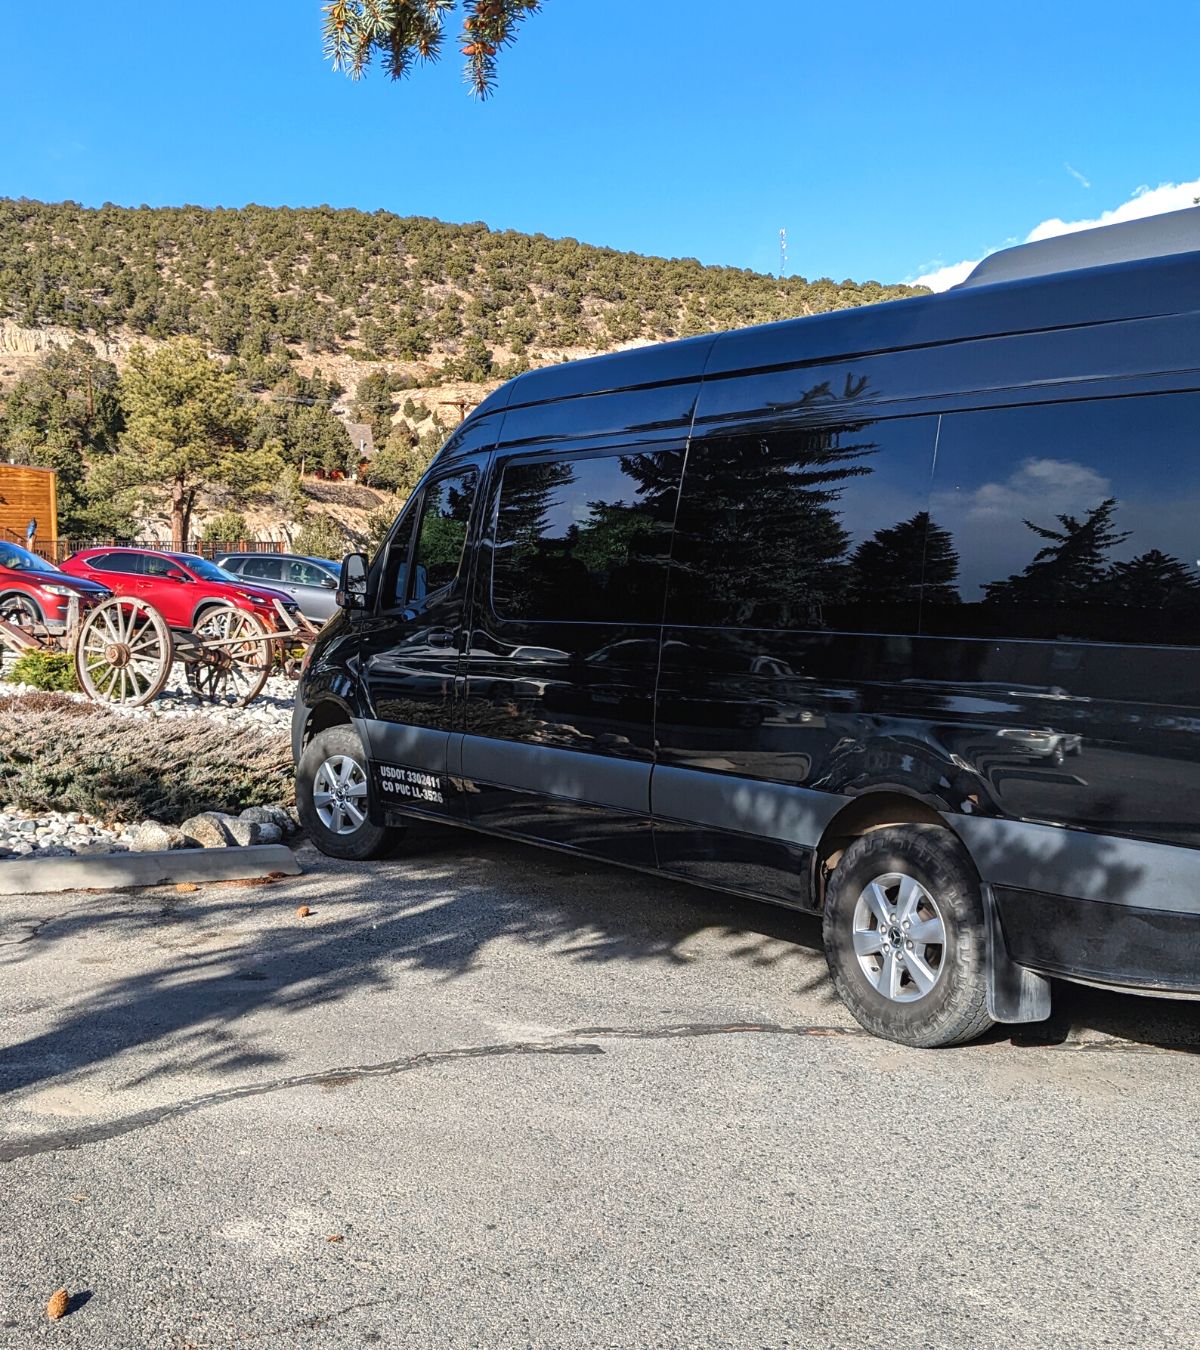 Rocky Mountain Executive Transport: Southern Colorado Tours & Luxury Travel